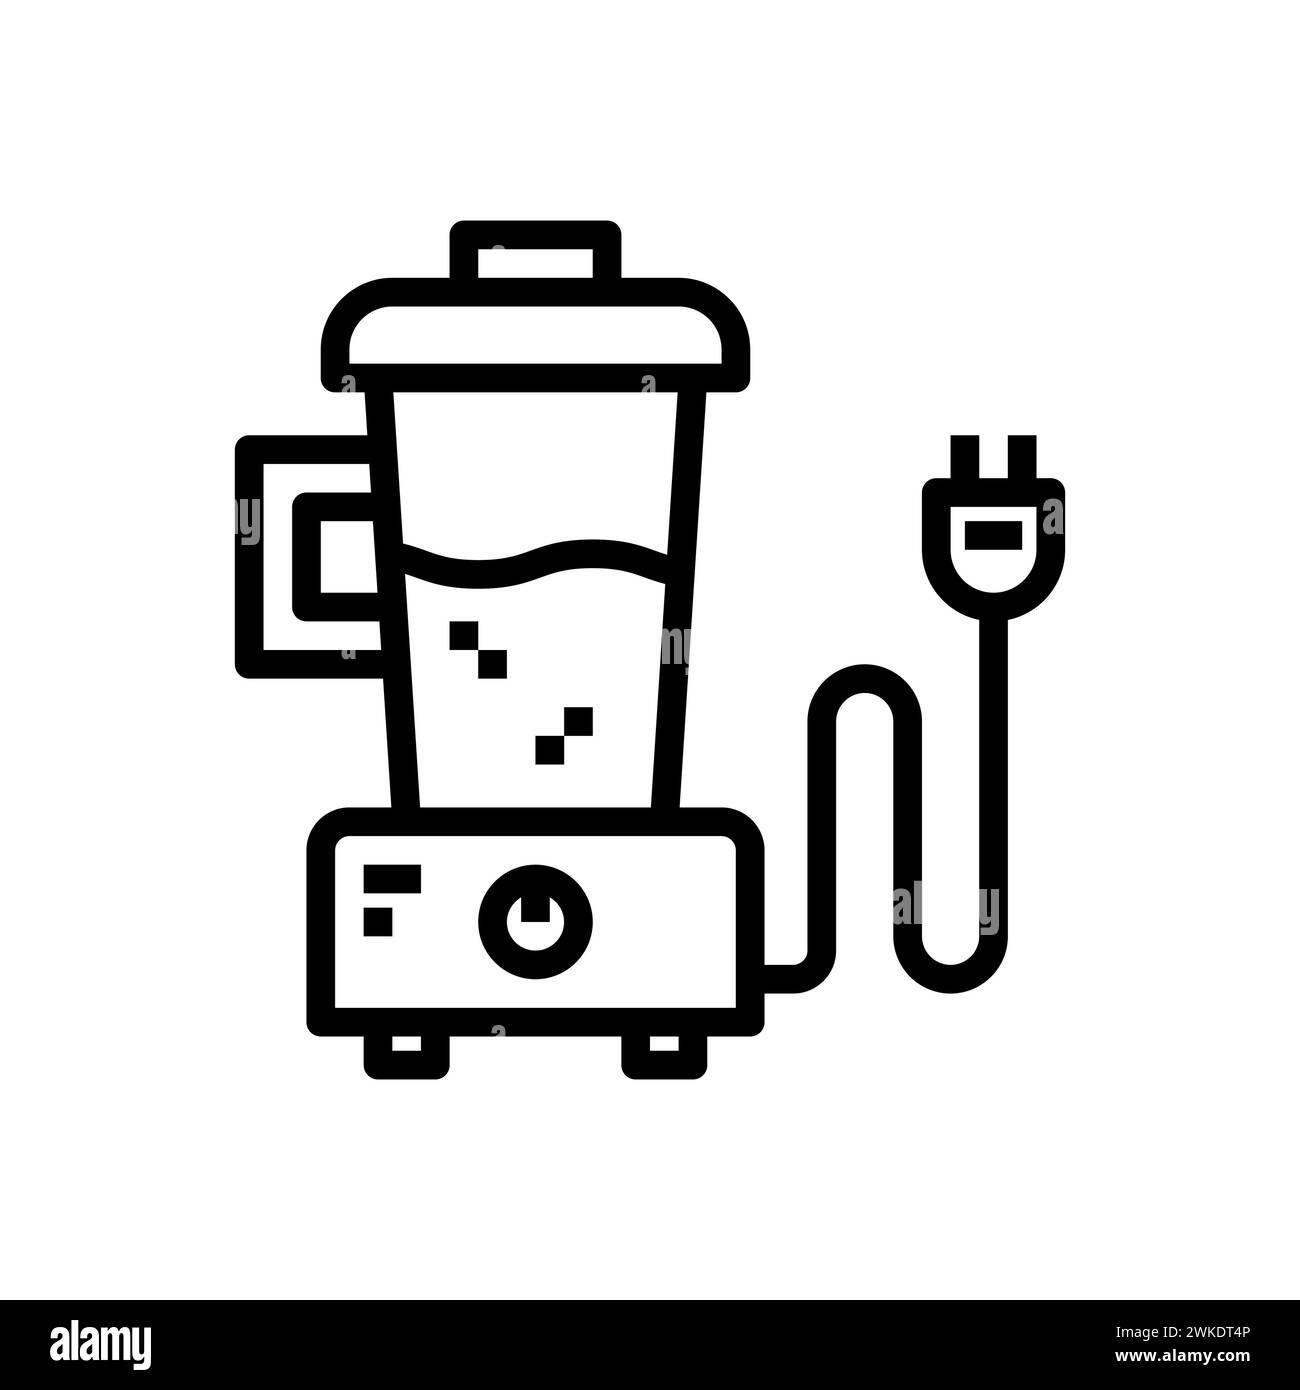 Art illustration symbol icon furniture logo household design sketch hand draw of juice blender Stock Vector